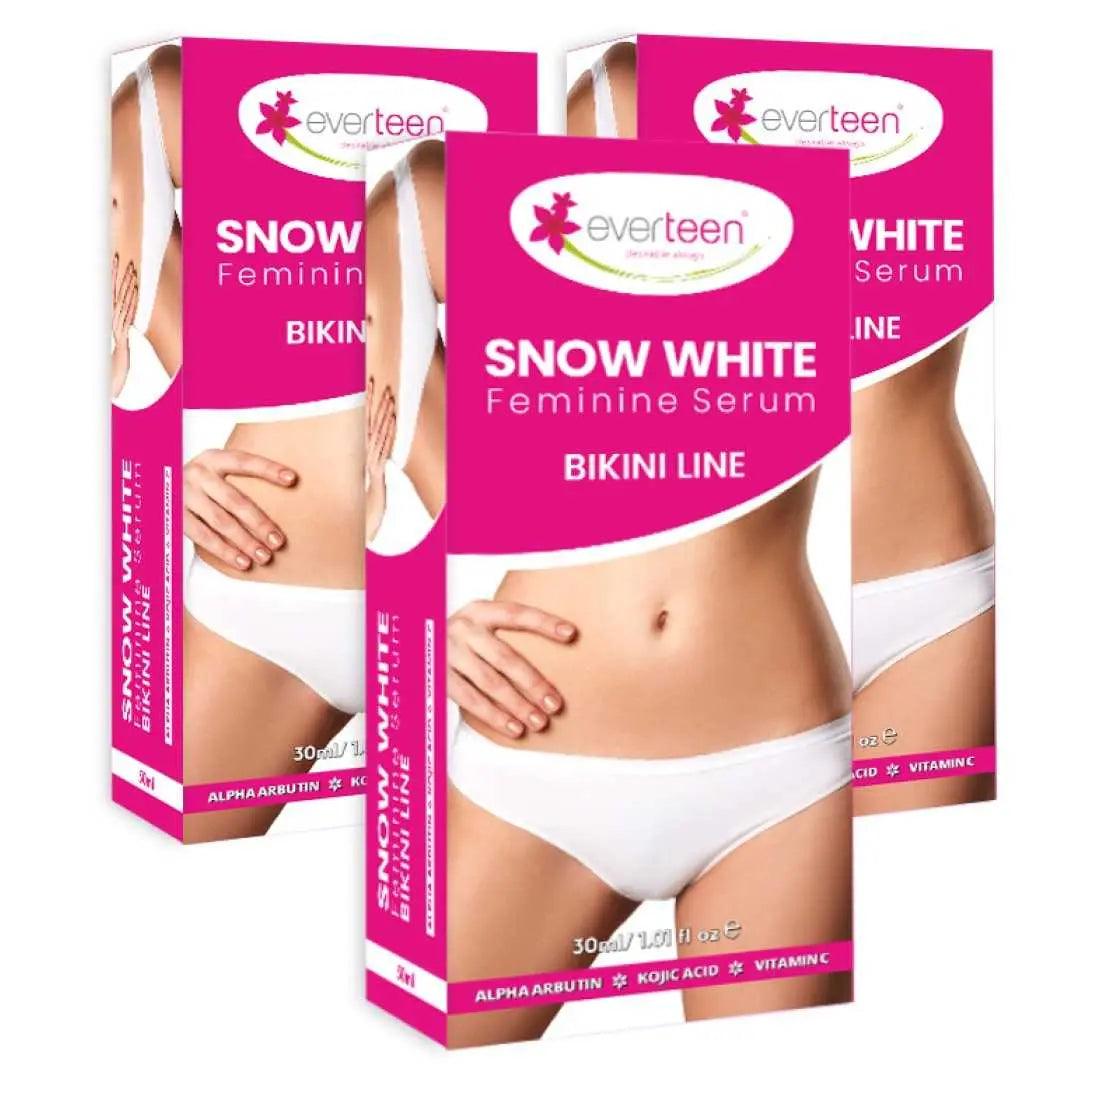 everteen Snow White Feminine Serum for Bikini Line in Women - 30ml 9559682315250